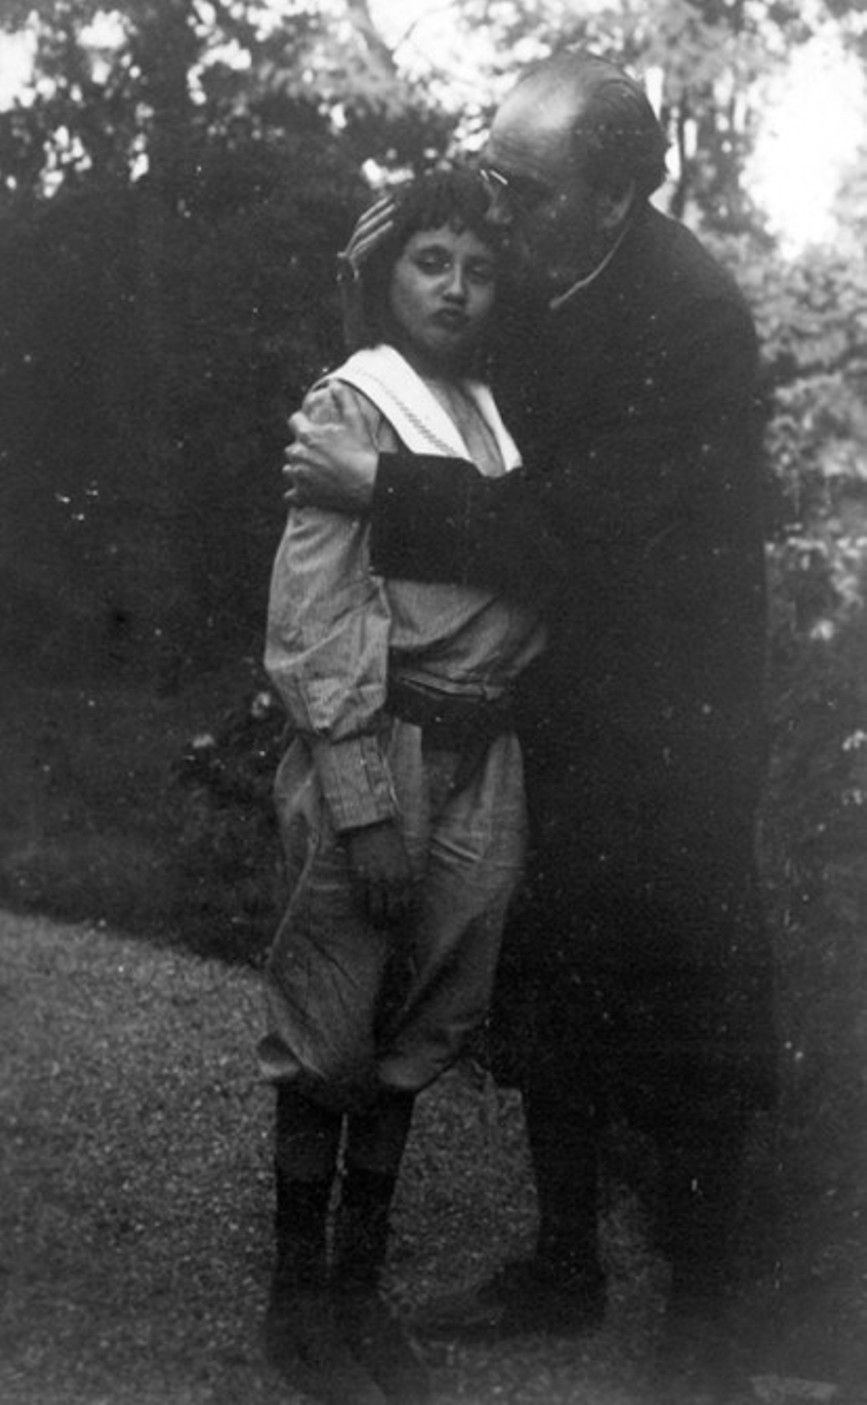 Image - Emile Zola embrassant Jacques